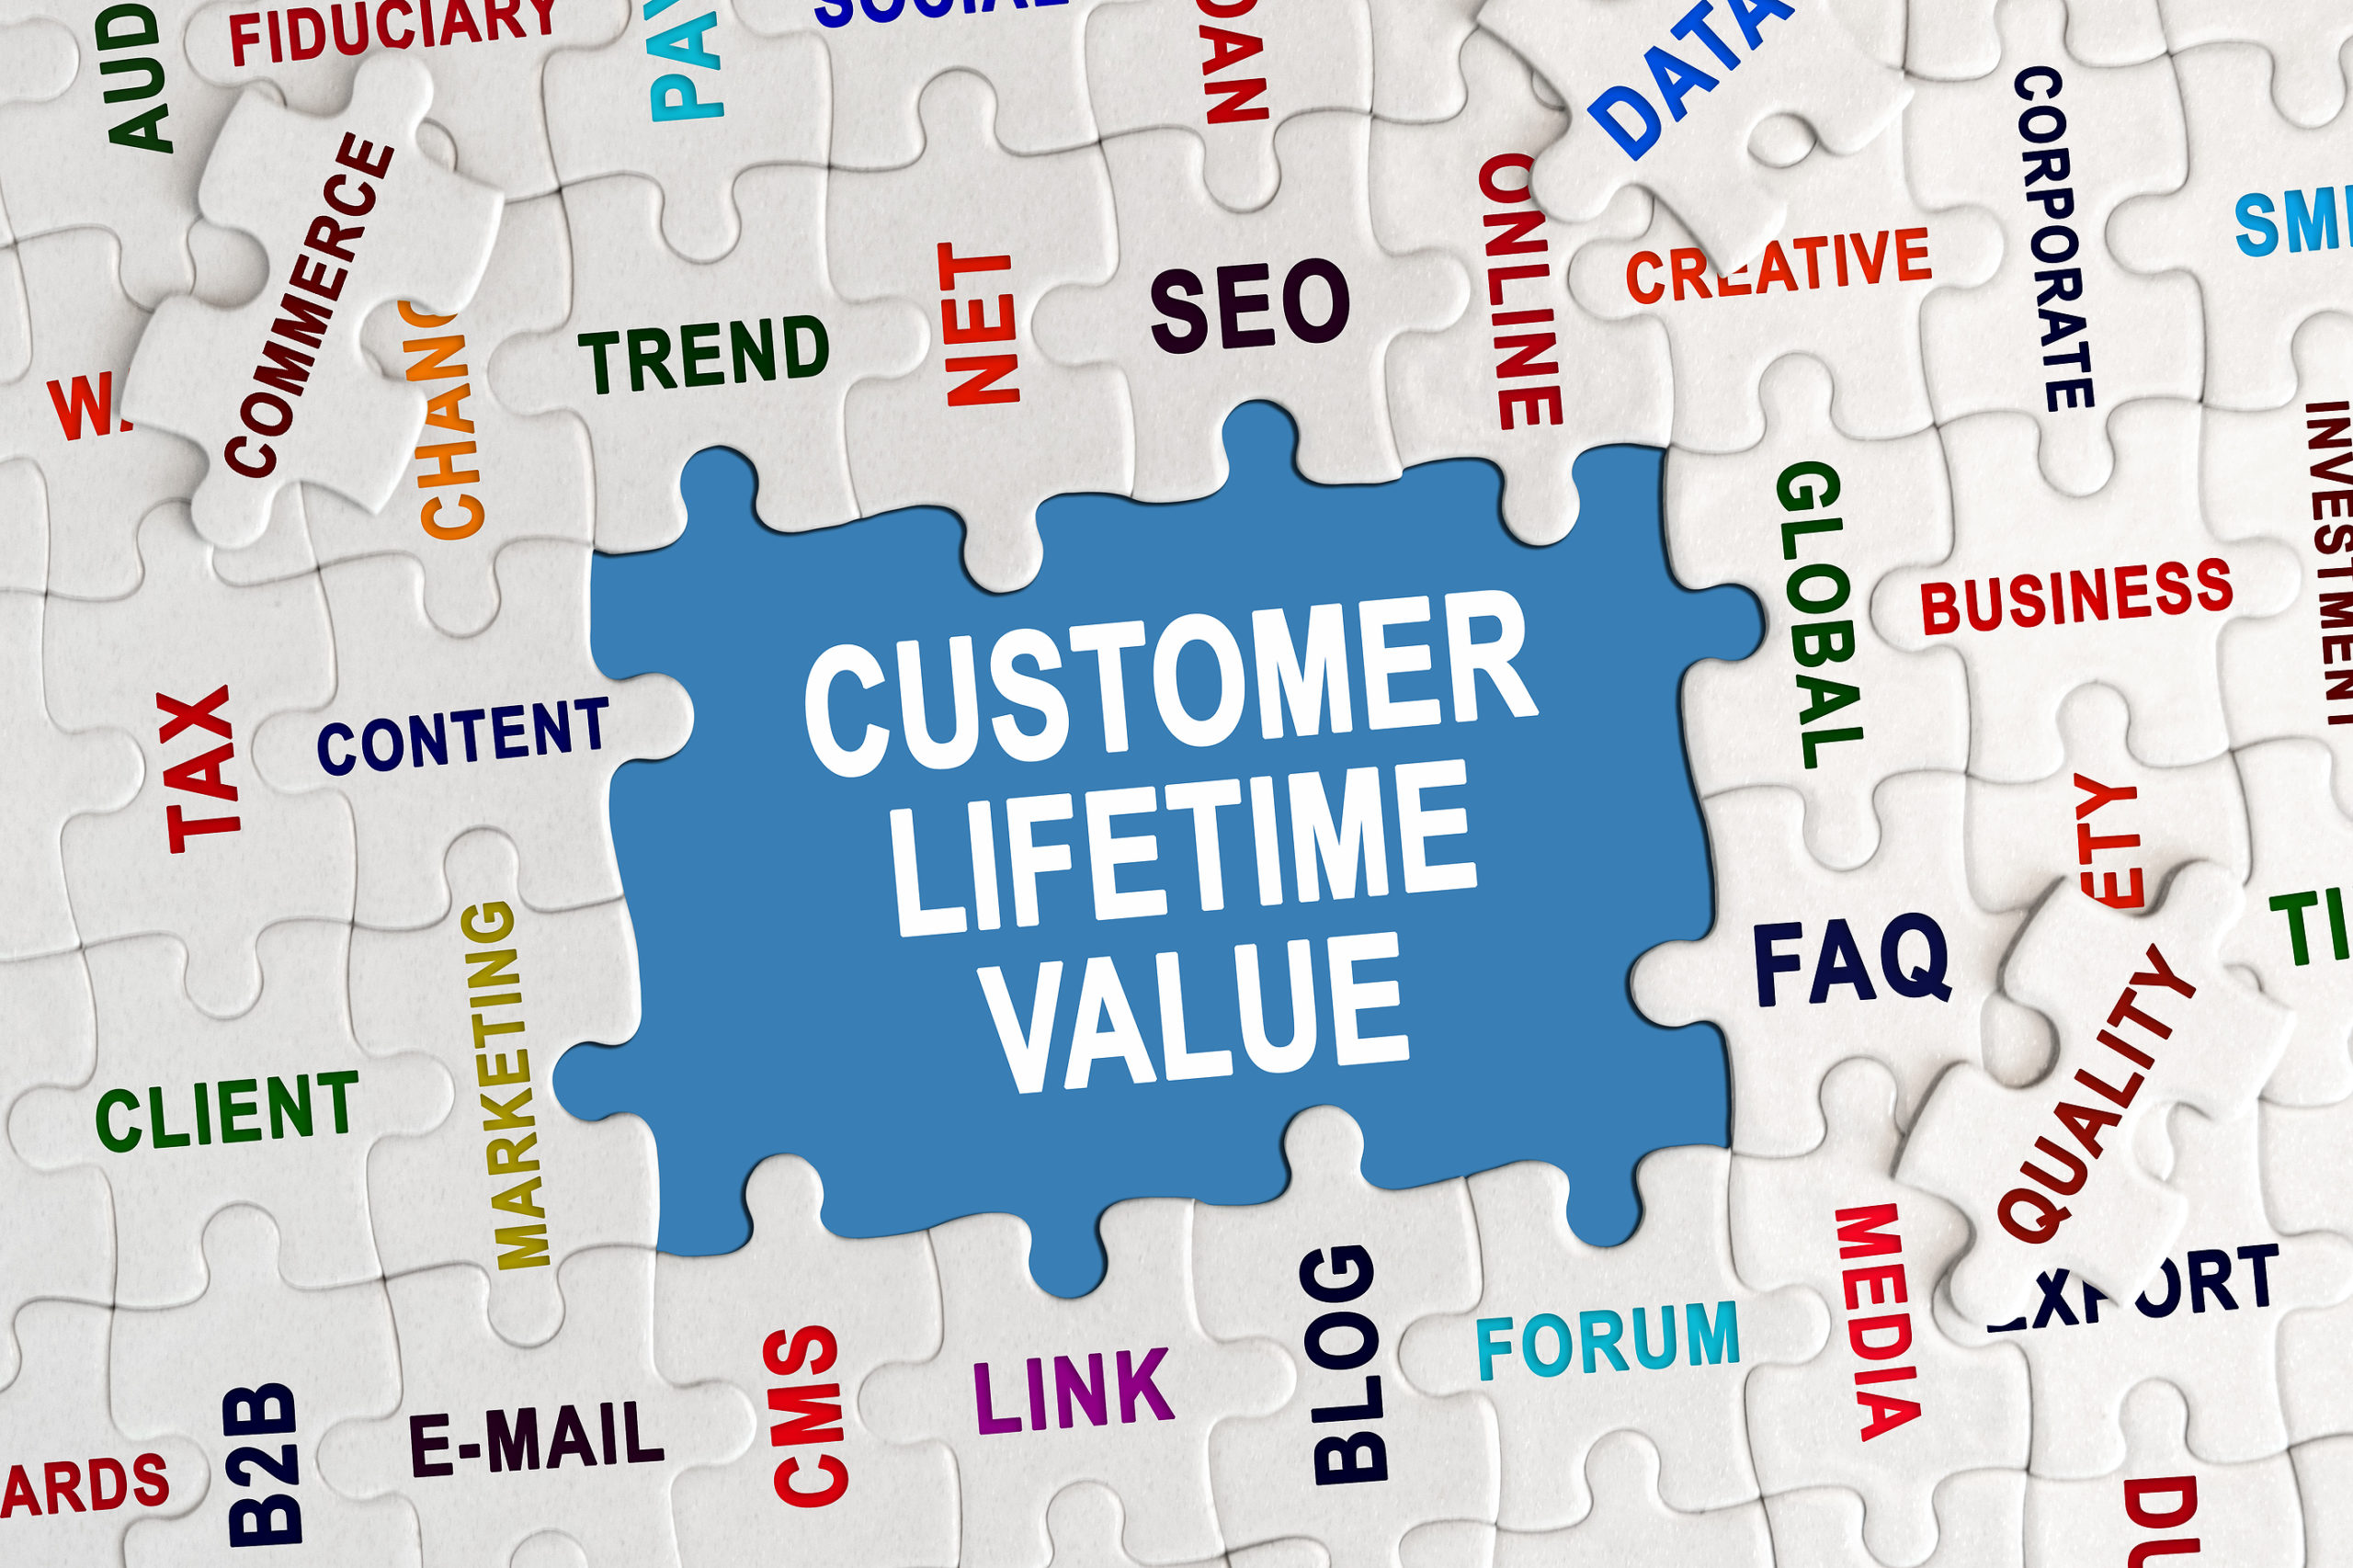 Customer Lifetime Value